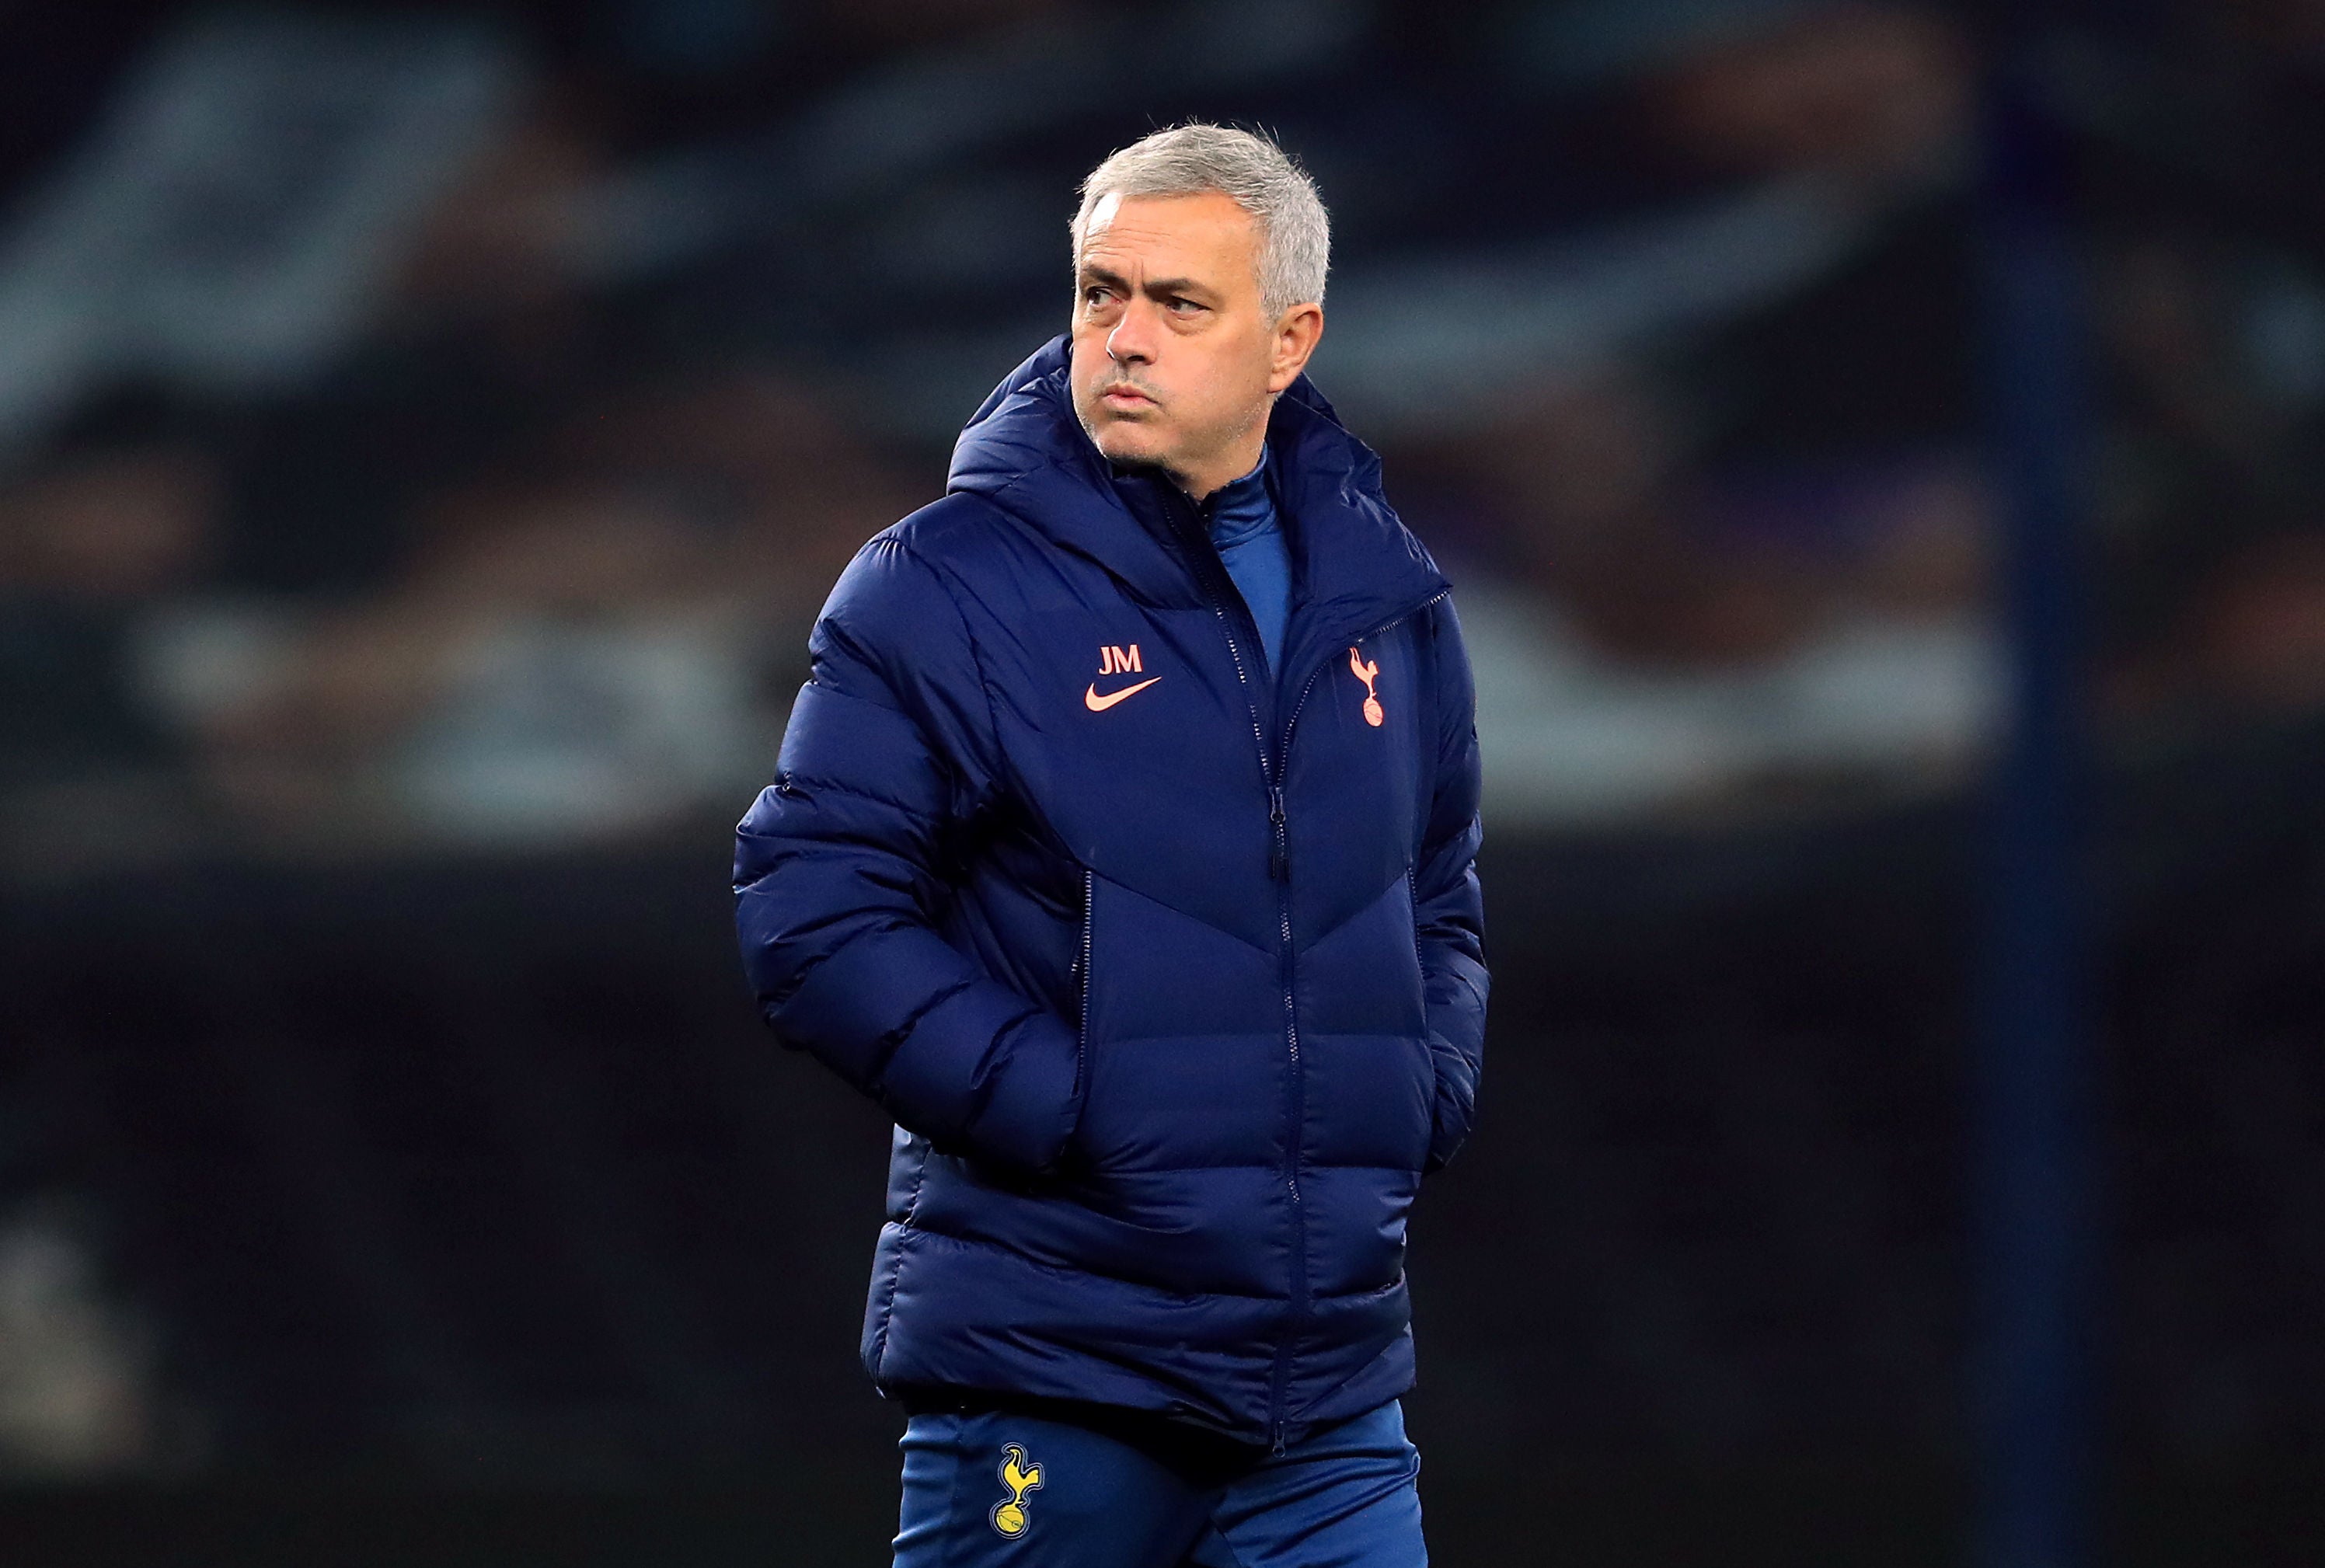 Jose Mourinho’s Tottenham take on Liverpool at Anfield on Wednesday